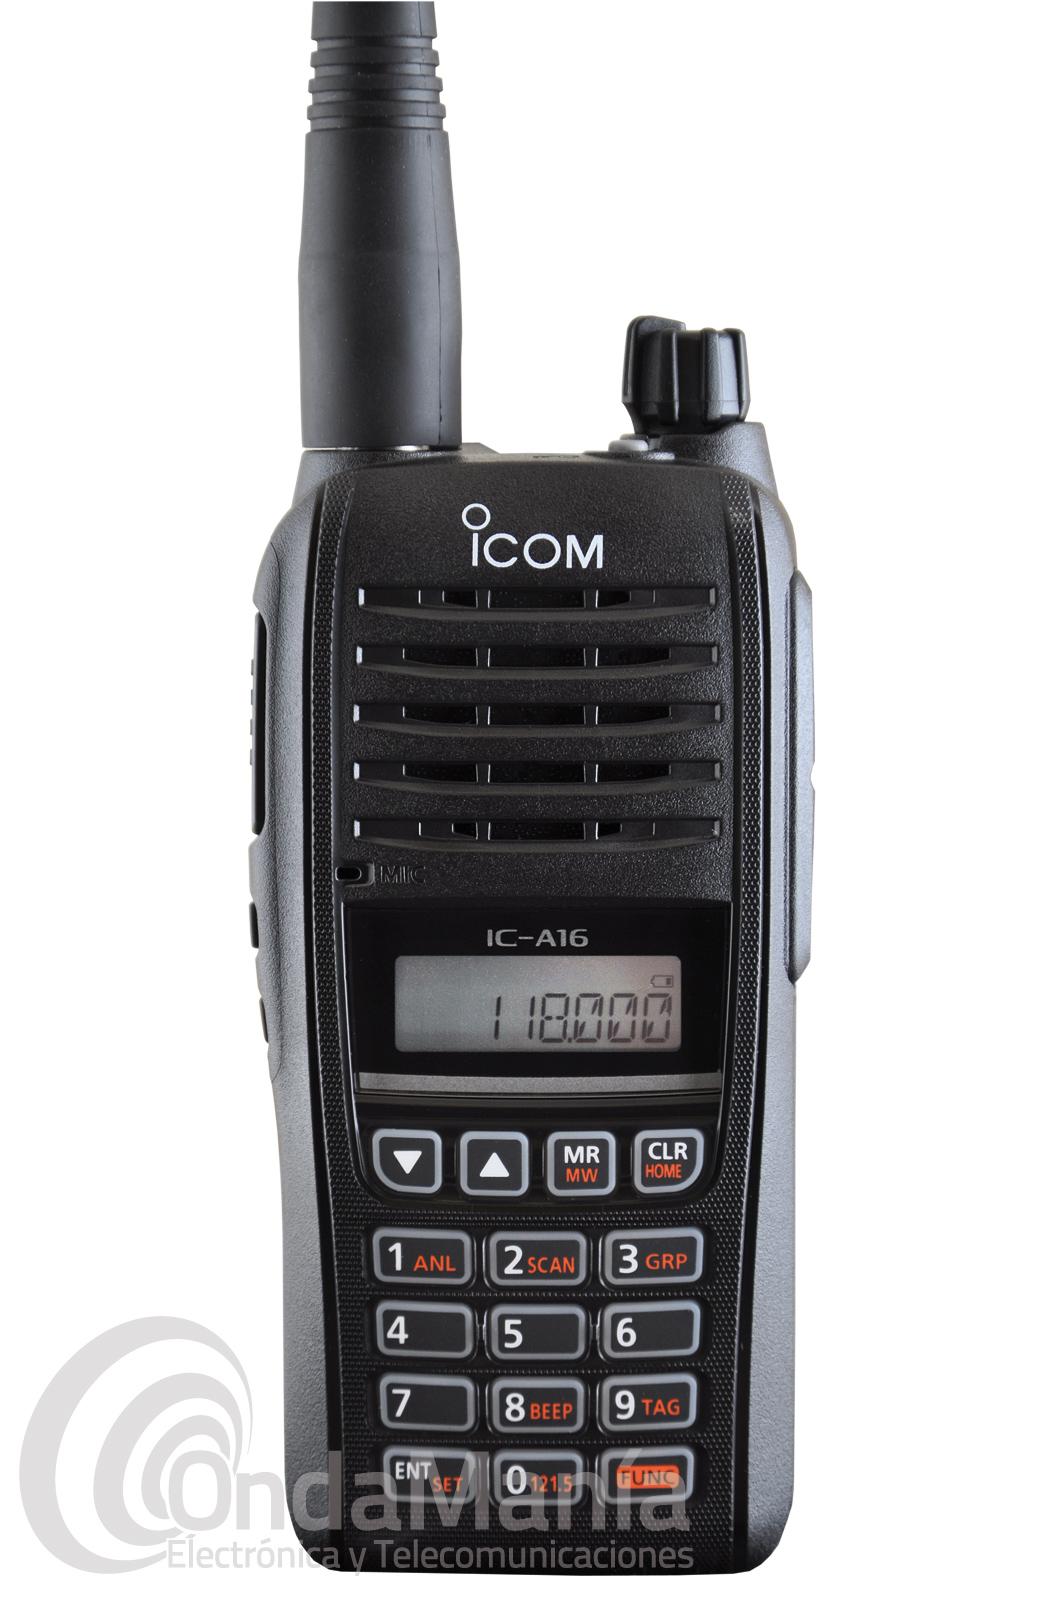 Radio YAESU Vertex FTA - 250L VHF Handheld Radio - banda aérea